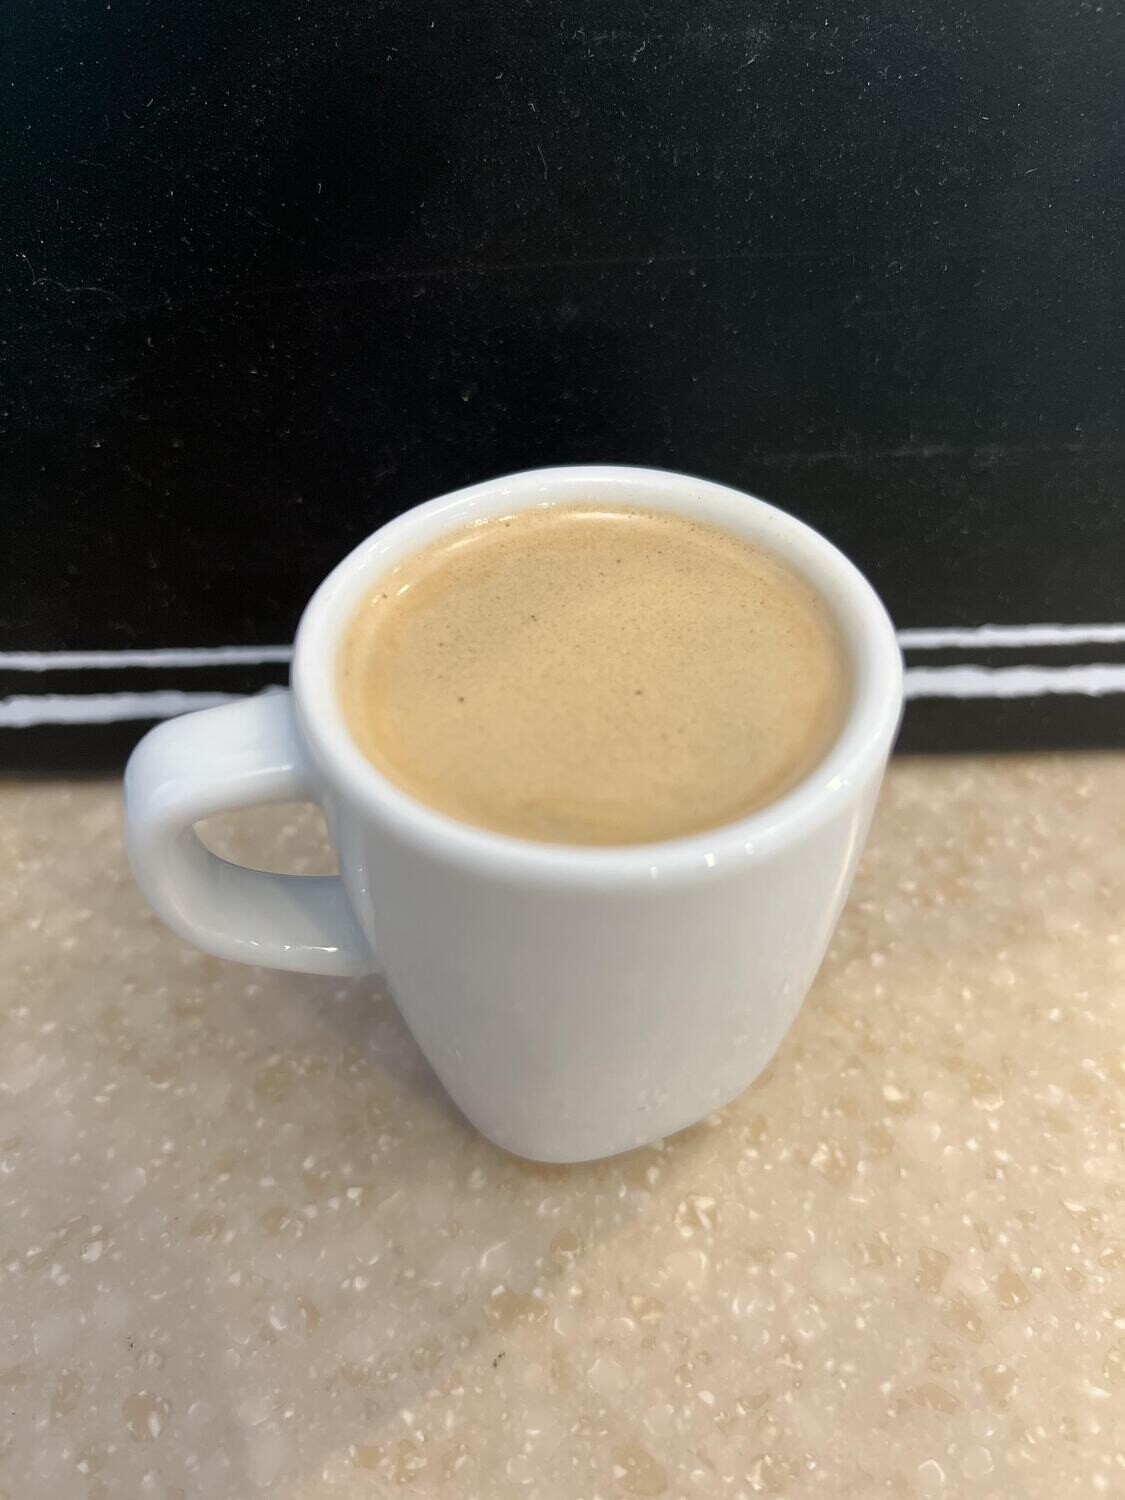 Double Shot Espresso